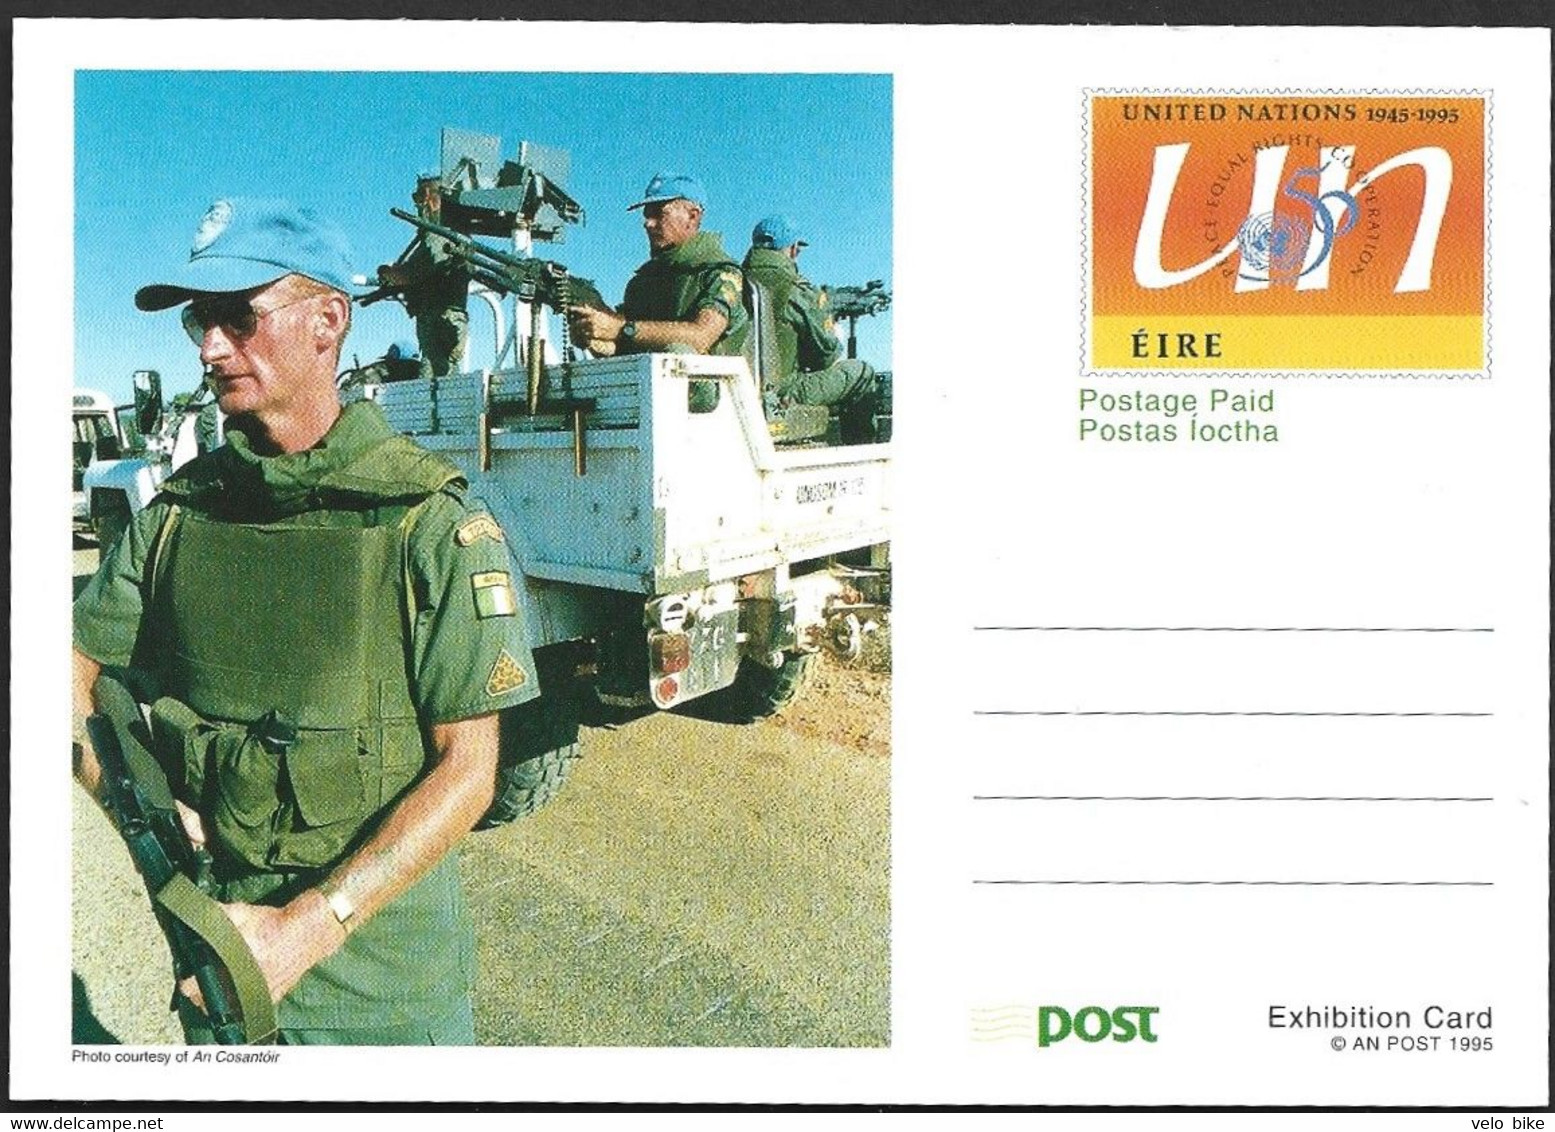 Eire Ireland Postal Stationery Postage Paid Exhibition Card 1995 UN Soldier Uniform Weapon Truck Loggo Globe Peace Equal - Ganzsachen